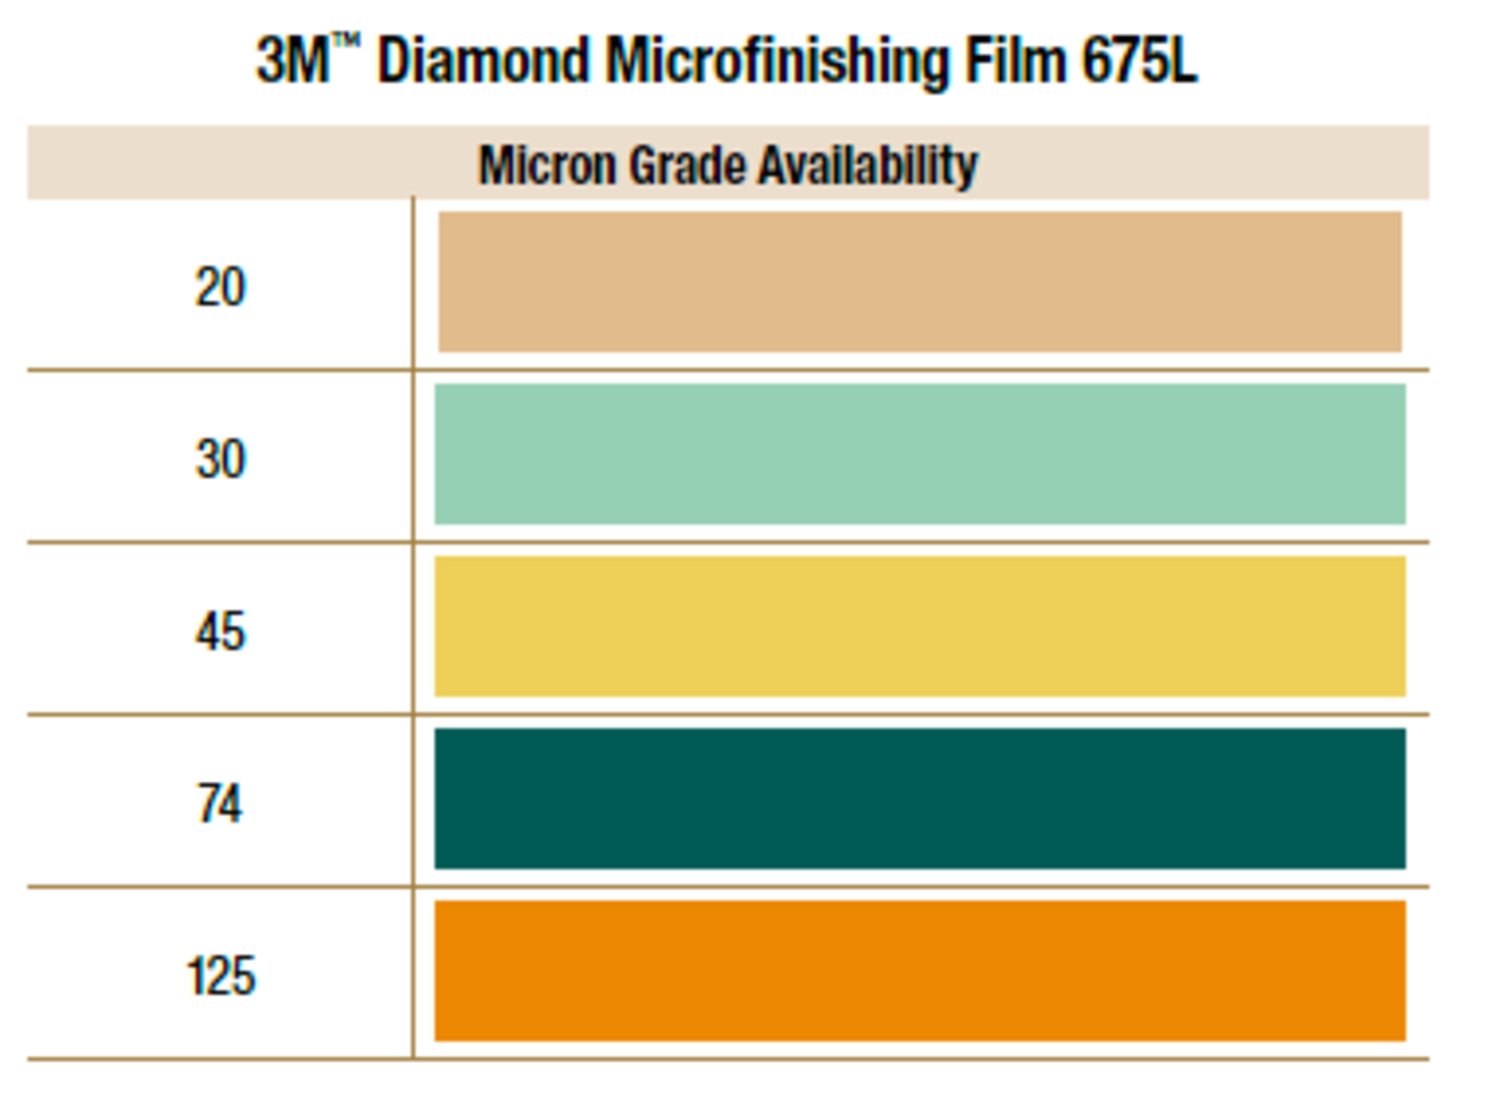 7100052488 - 3M Diamond Microfinishing Film Roll 675L, 20 Mic, Config